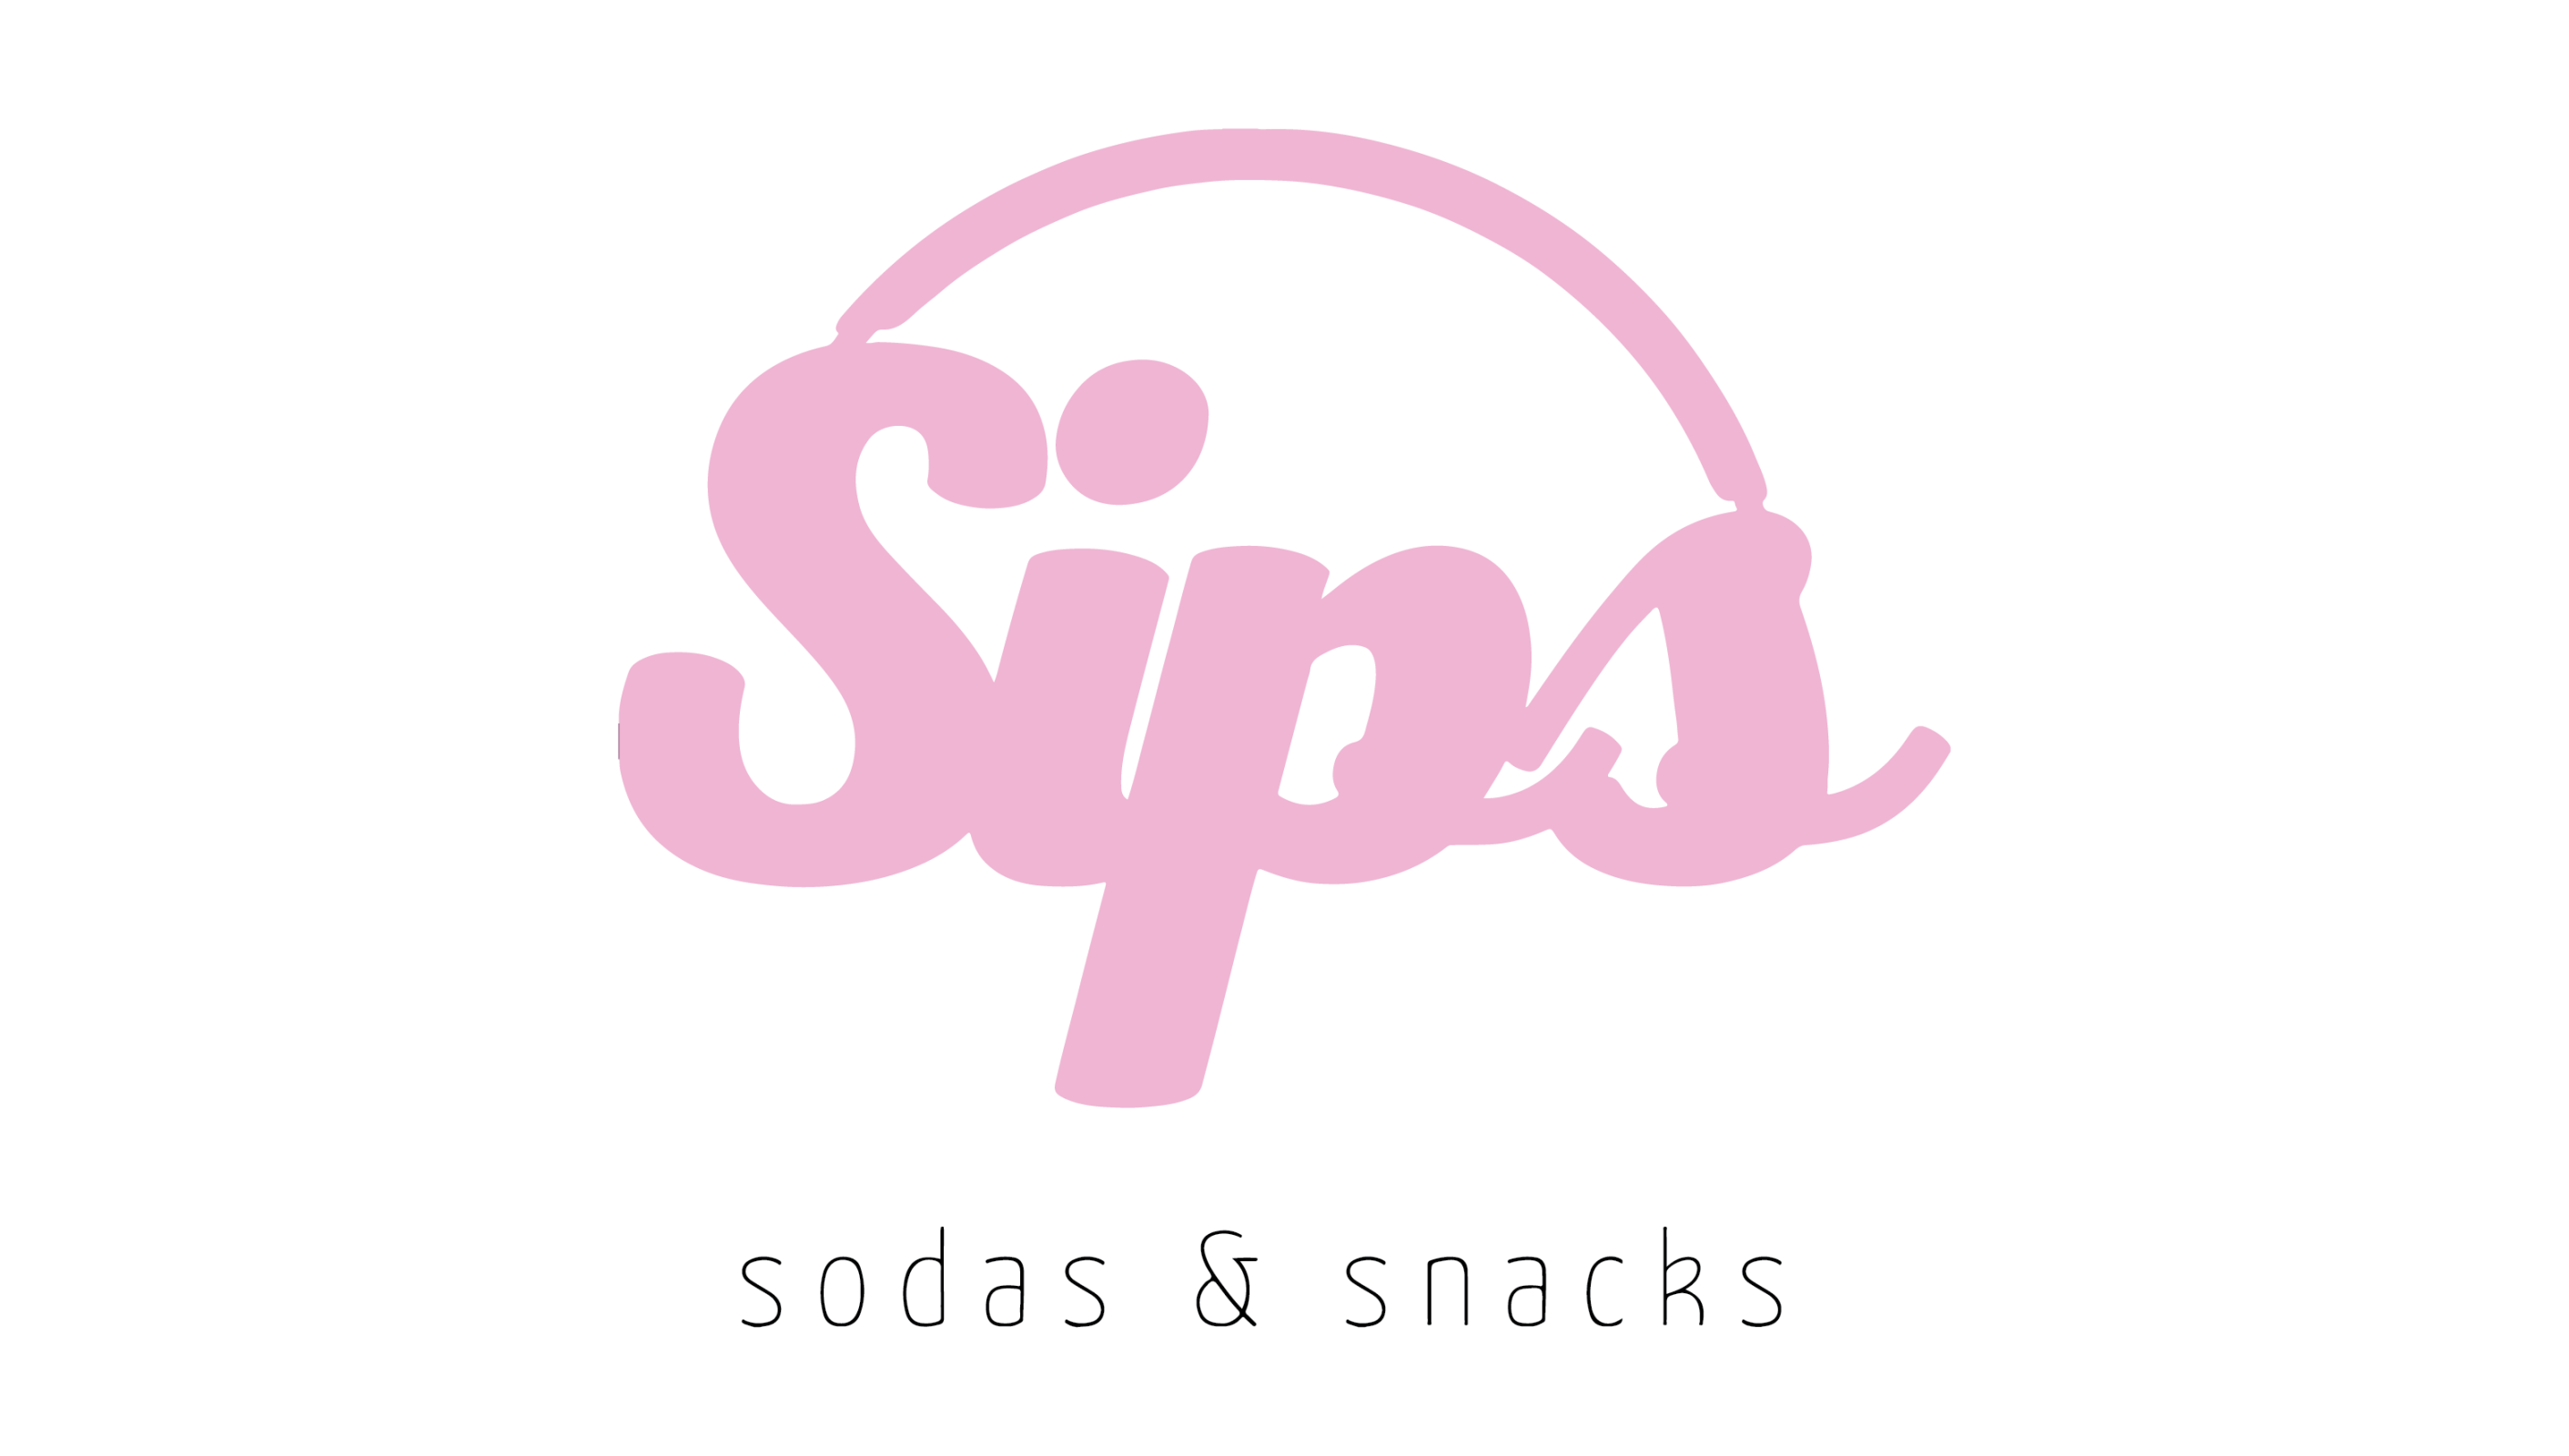 Sips Sodas & Snacks Logo